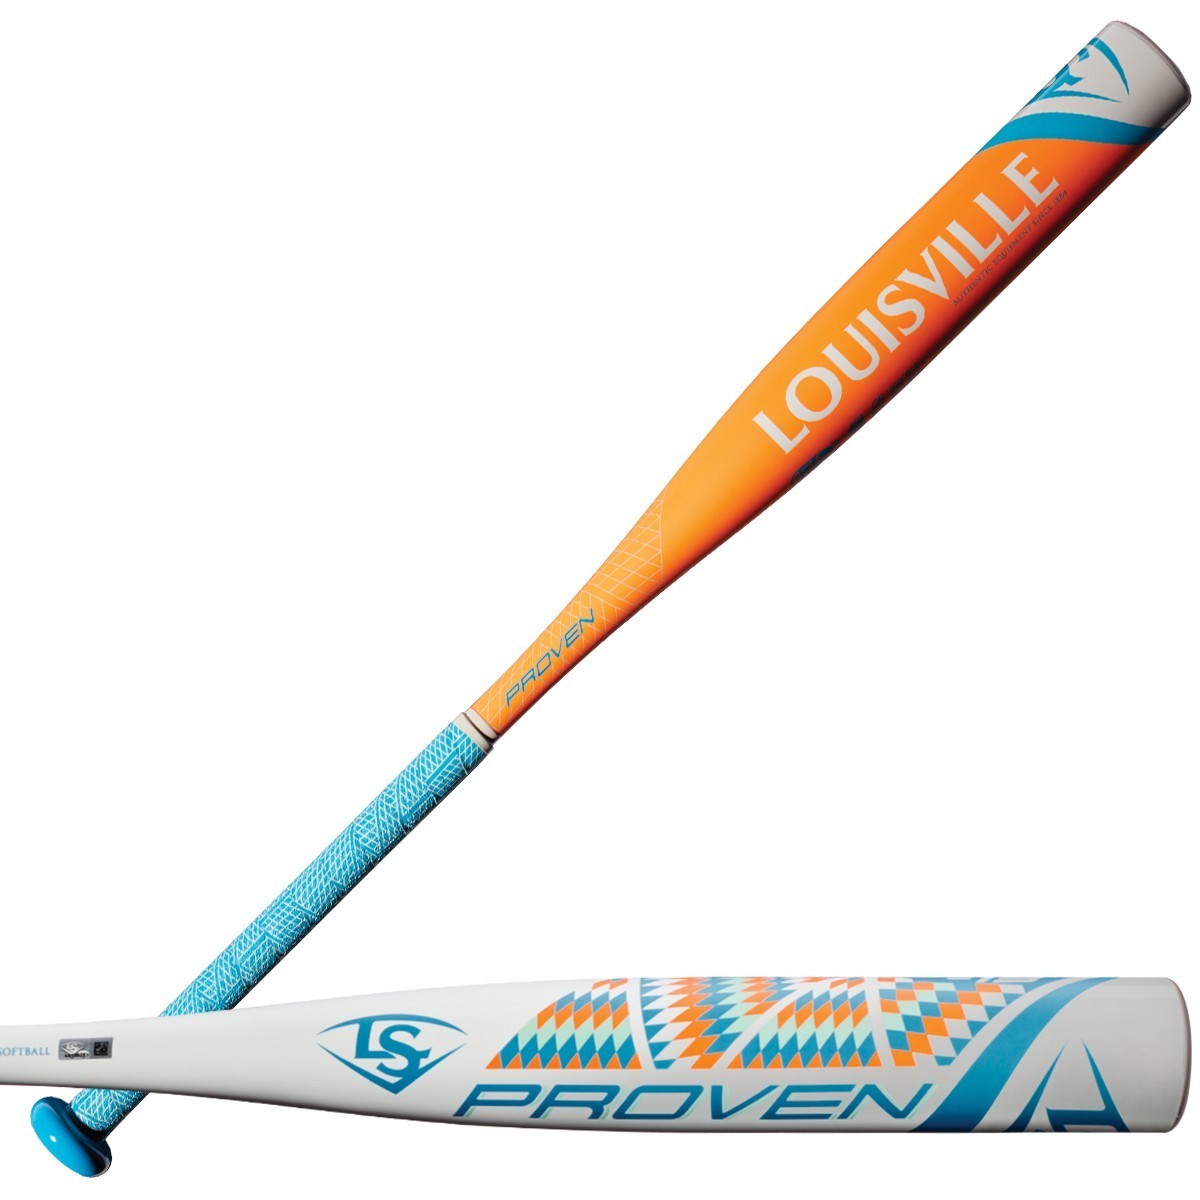 Louisville Slugger Proven Fastpitch Softball Bat